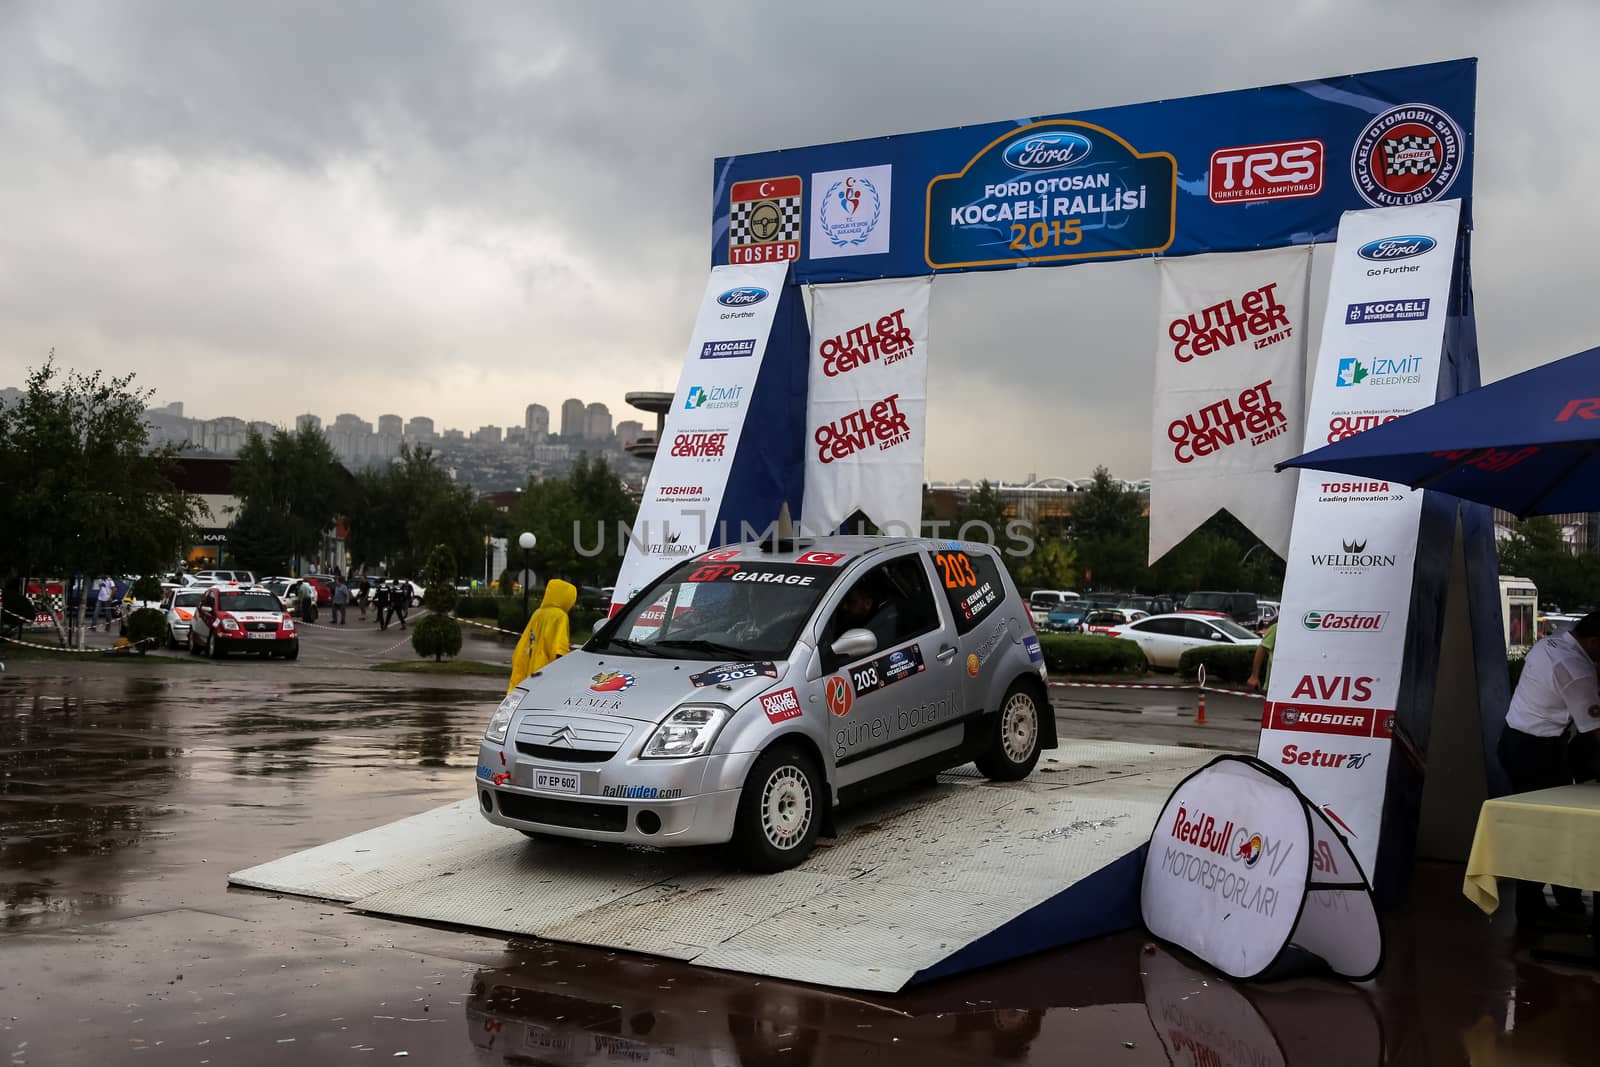 KOCAELI, TURKEY - AUGUST 23, 2015: Kenan Kar with Citroen C2 GT in Podium Ceremony of Kocaeli Rally 2015